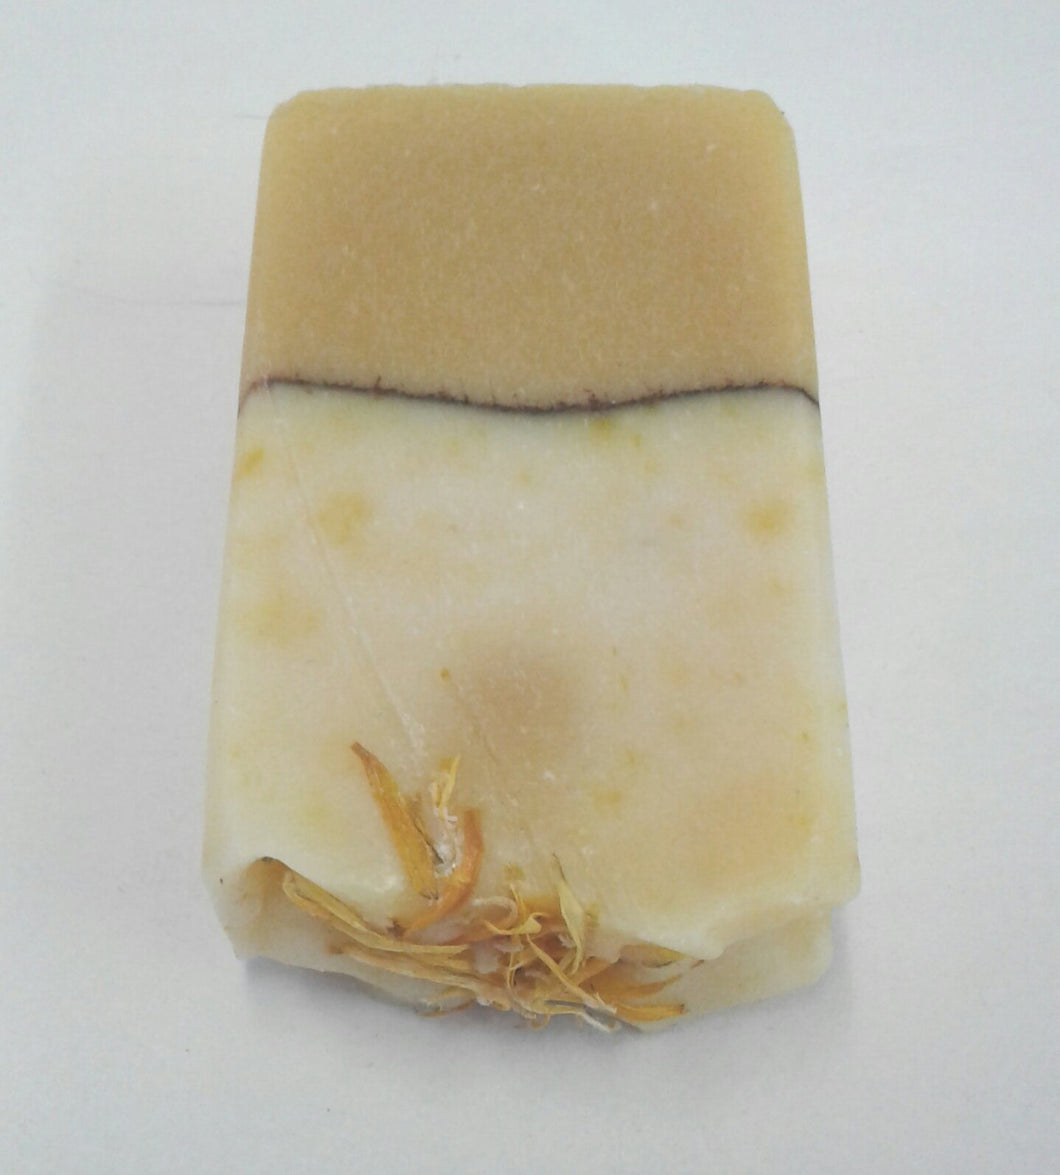 Handcrafted Goatsmilk, Calendula and Honey soap (no palm oil)